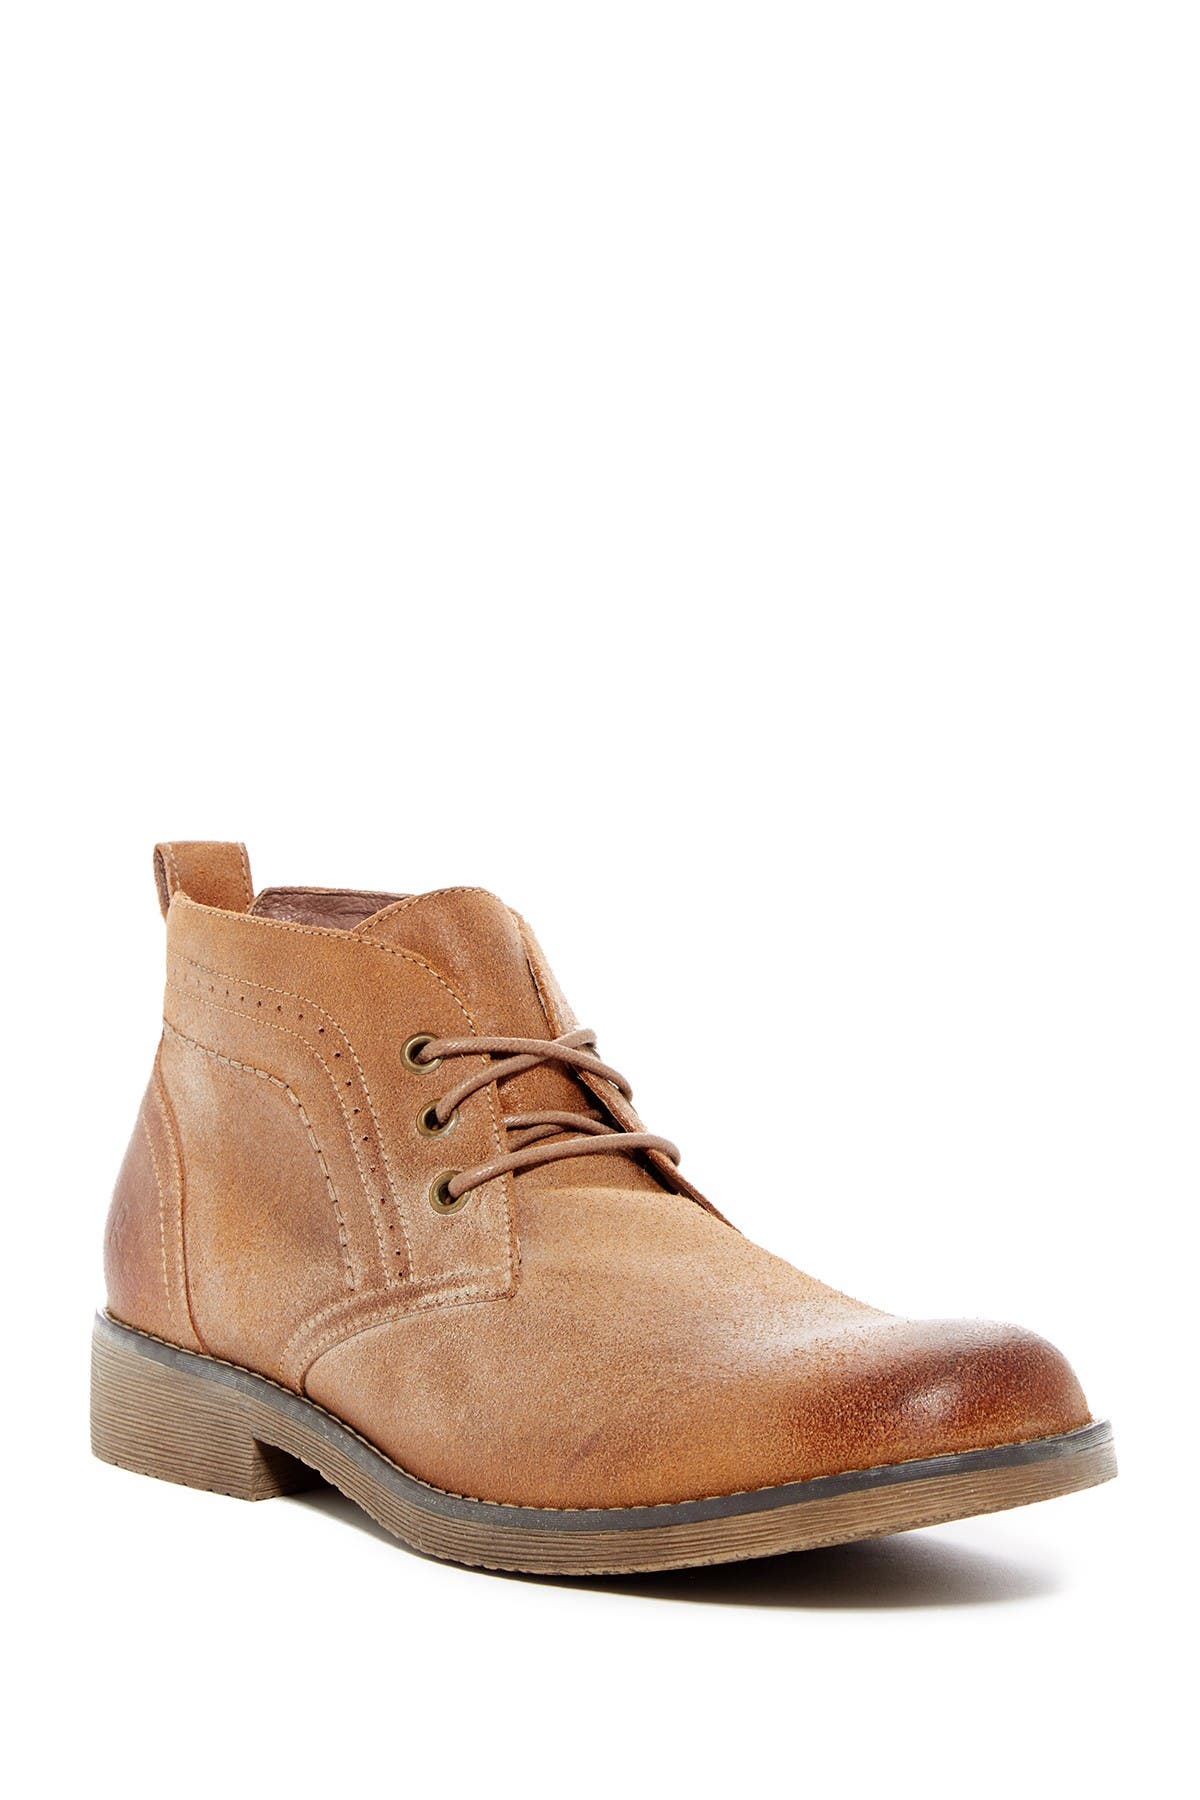 Roan | Pharos Leather Chukka Boot 